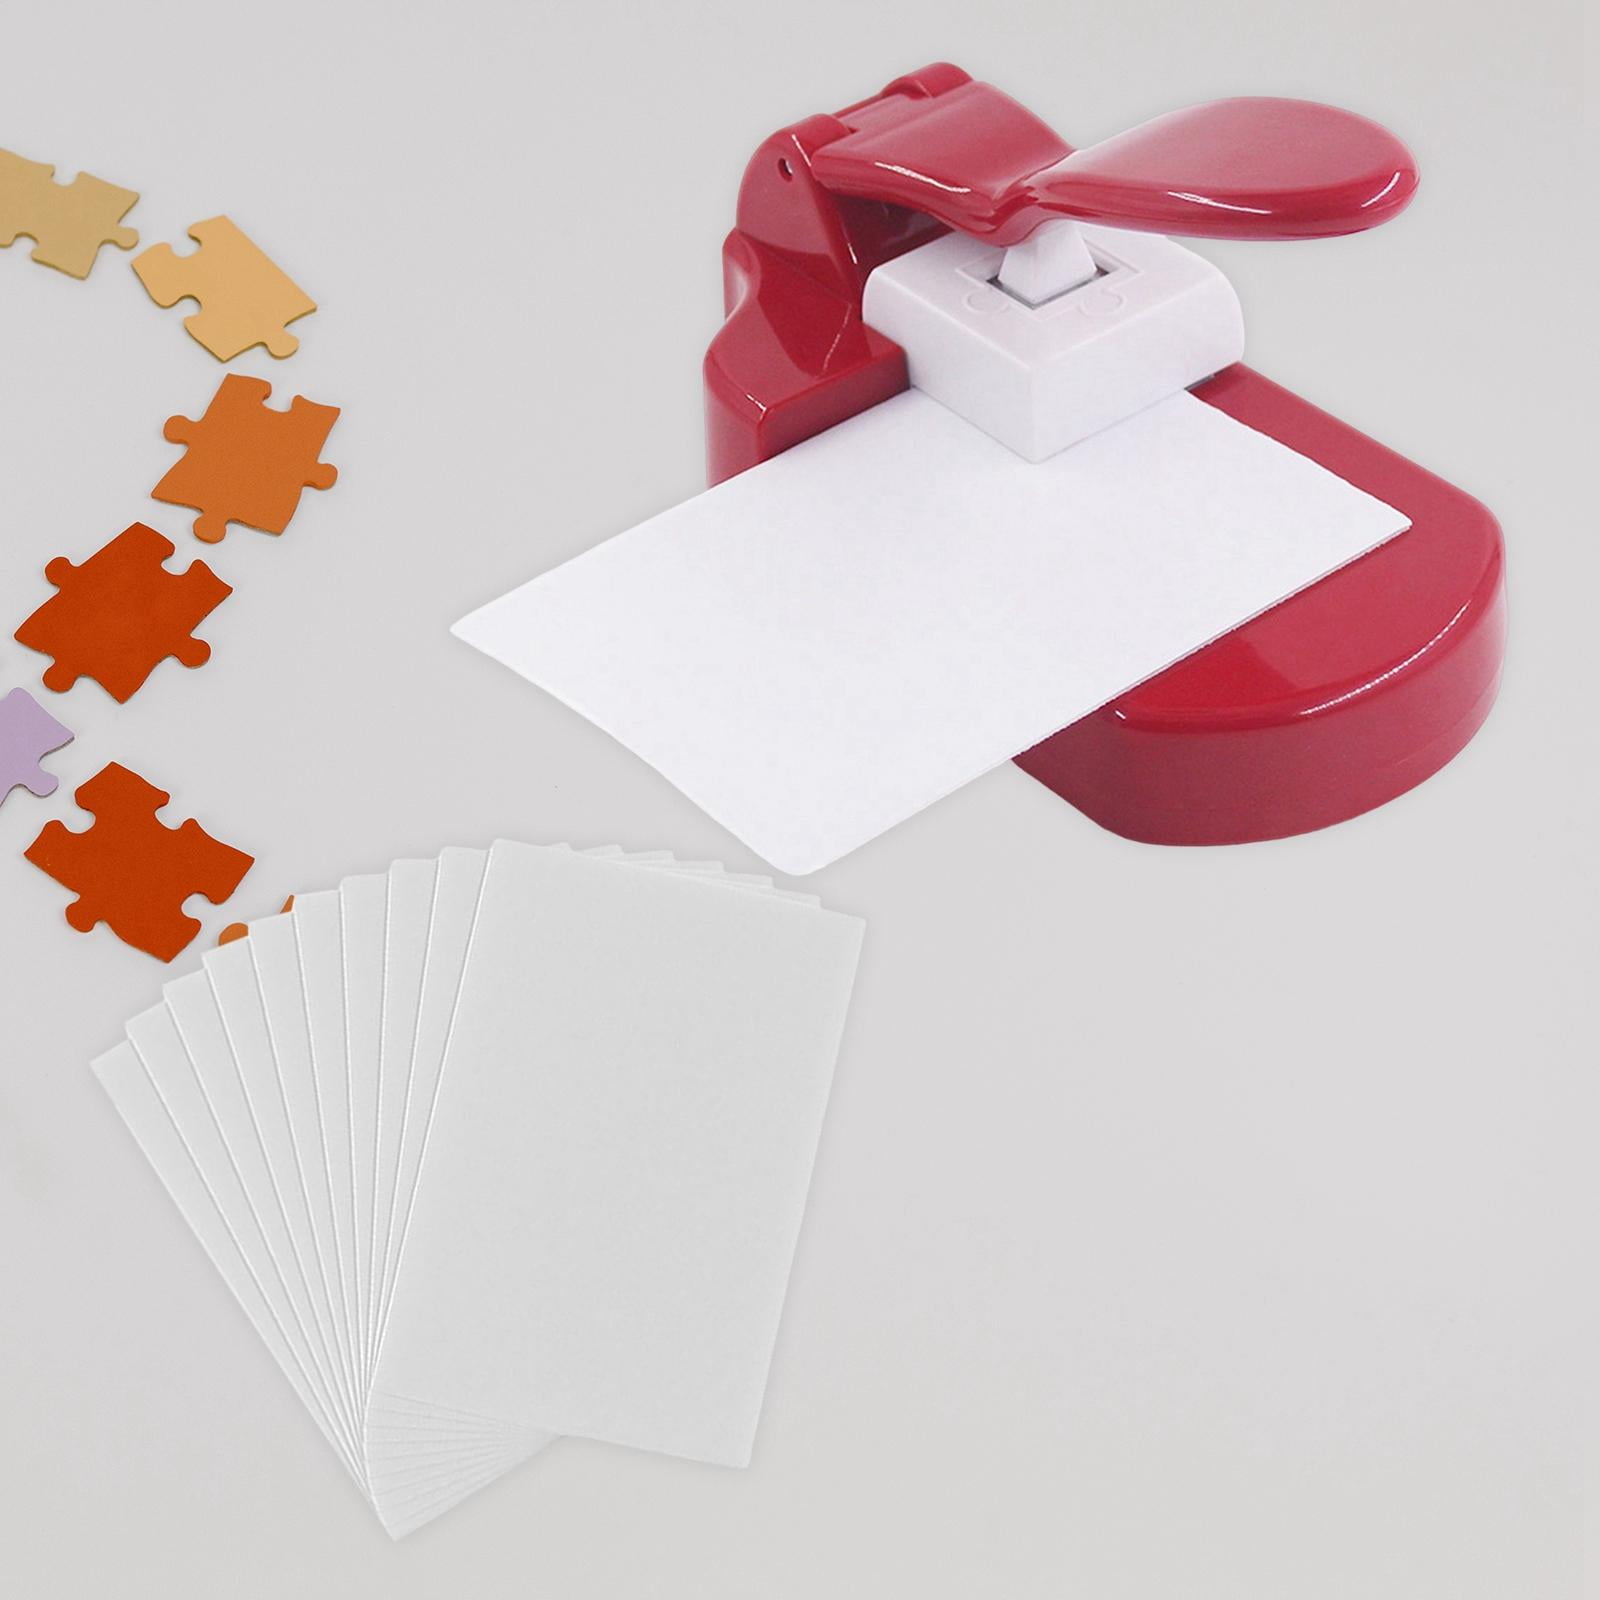 Jigsaw Puzzle Making Machine Paper Cutting Tool DIY Photo Cutter